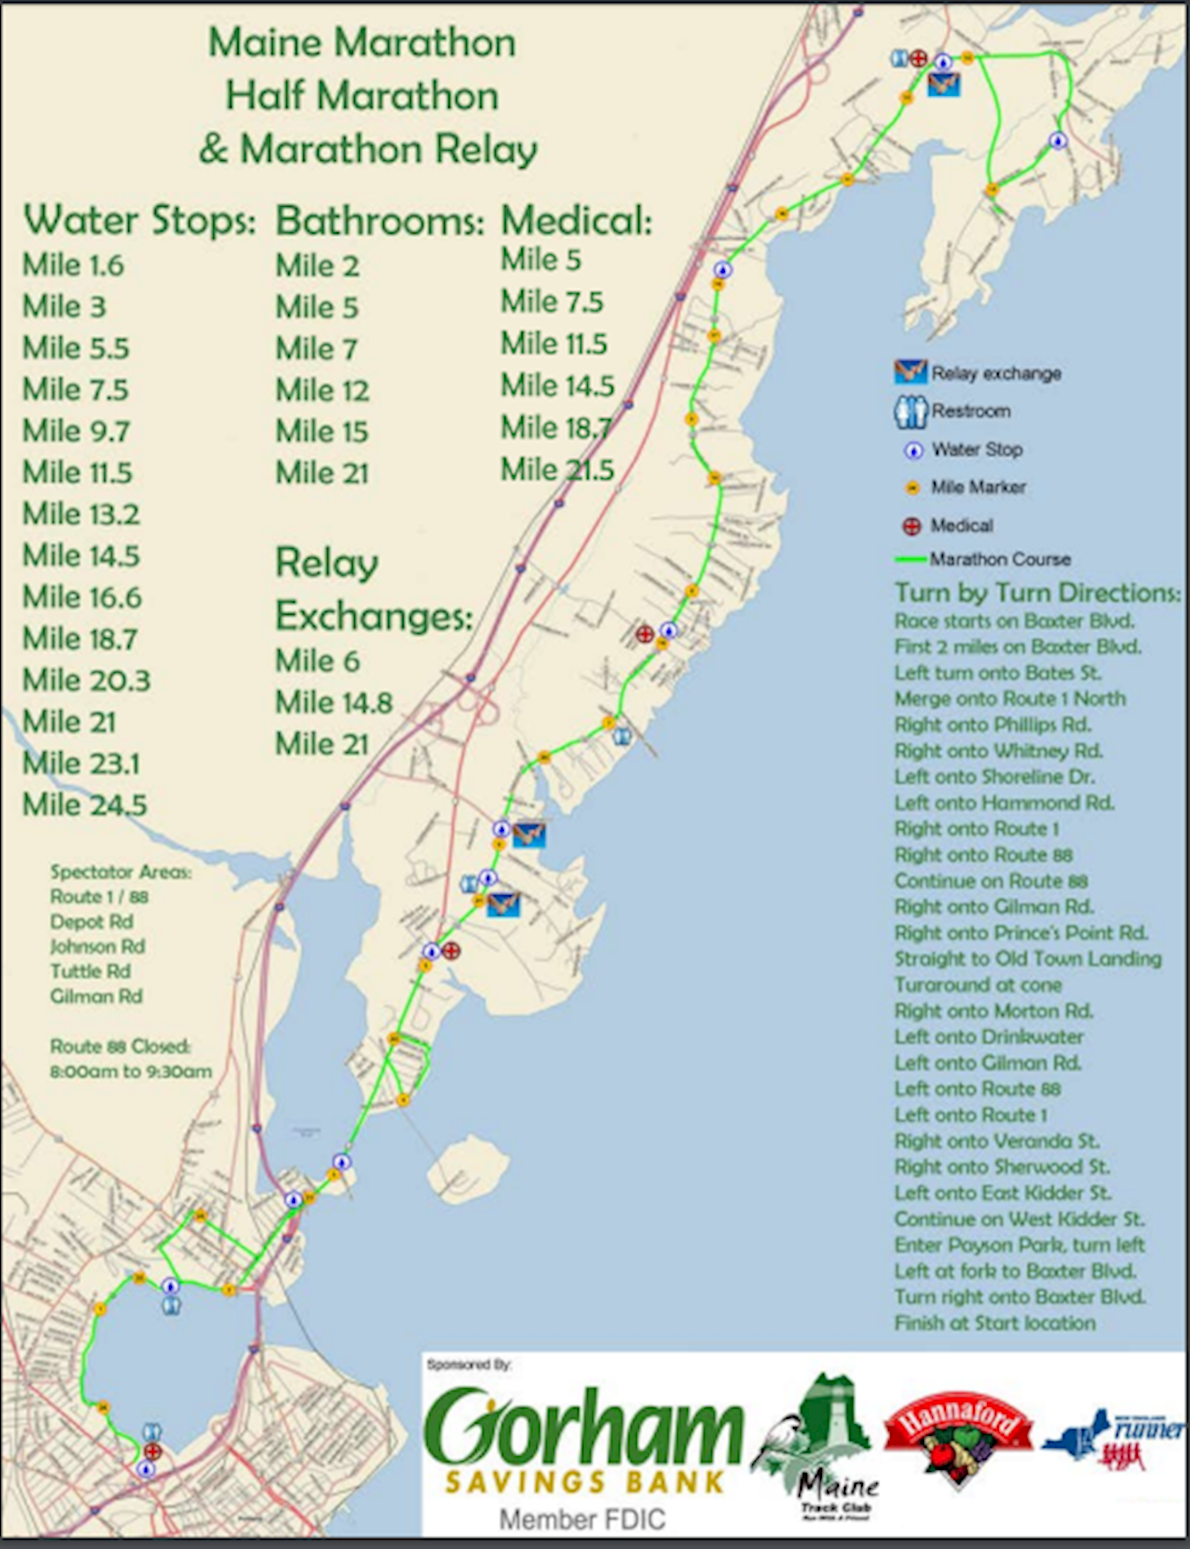 Gorham Savings Bank Maine Marathon Route Map